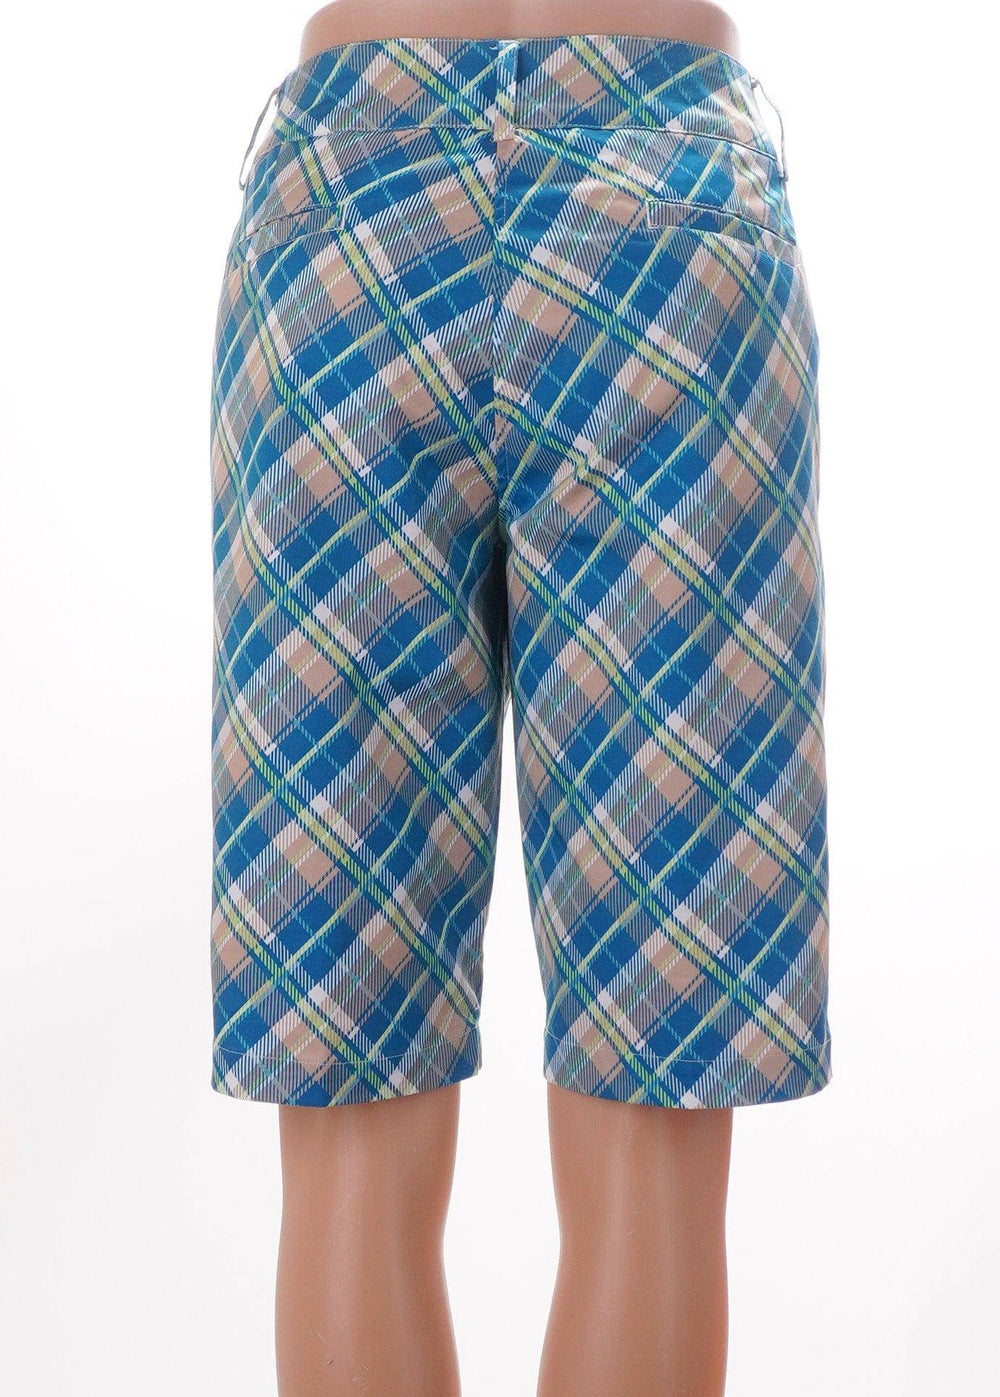 GGblue 8 / Blue / Consigned GG Blue Bermuda Shorts - Blue/Beige Plaid - Size 8 Shorts